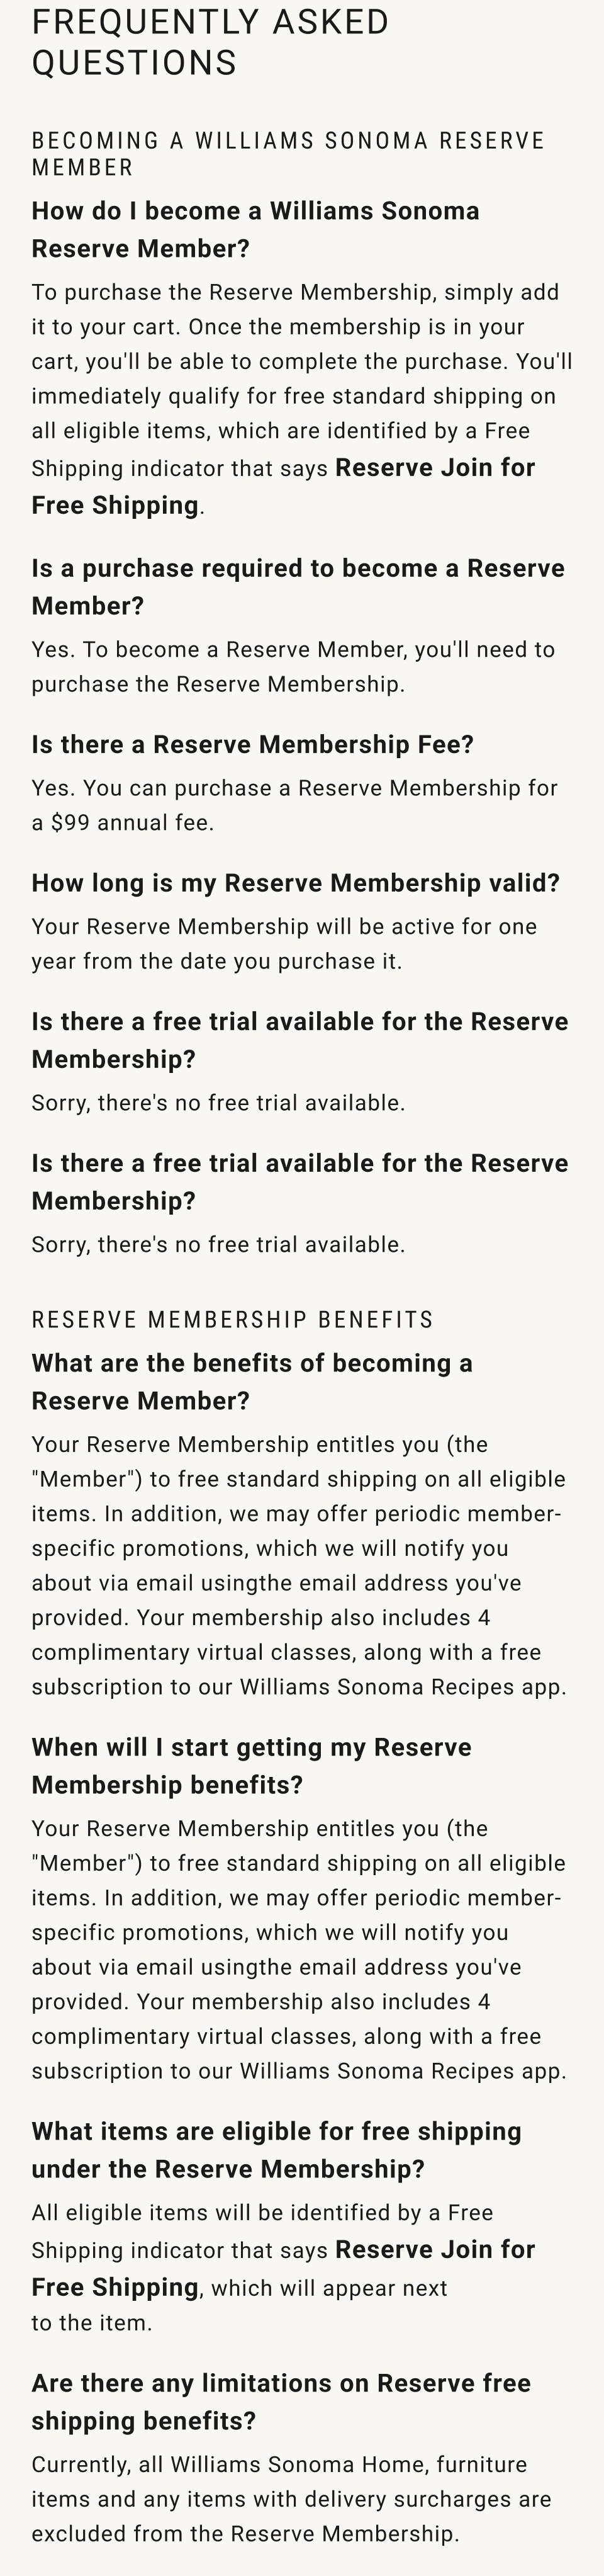 Williams Sonoma Reserve Membership